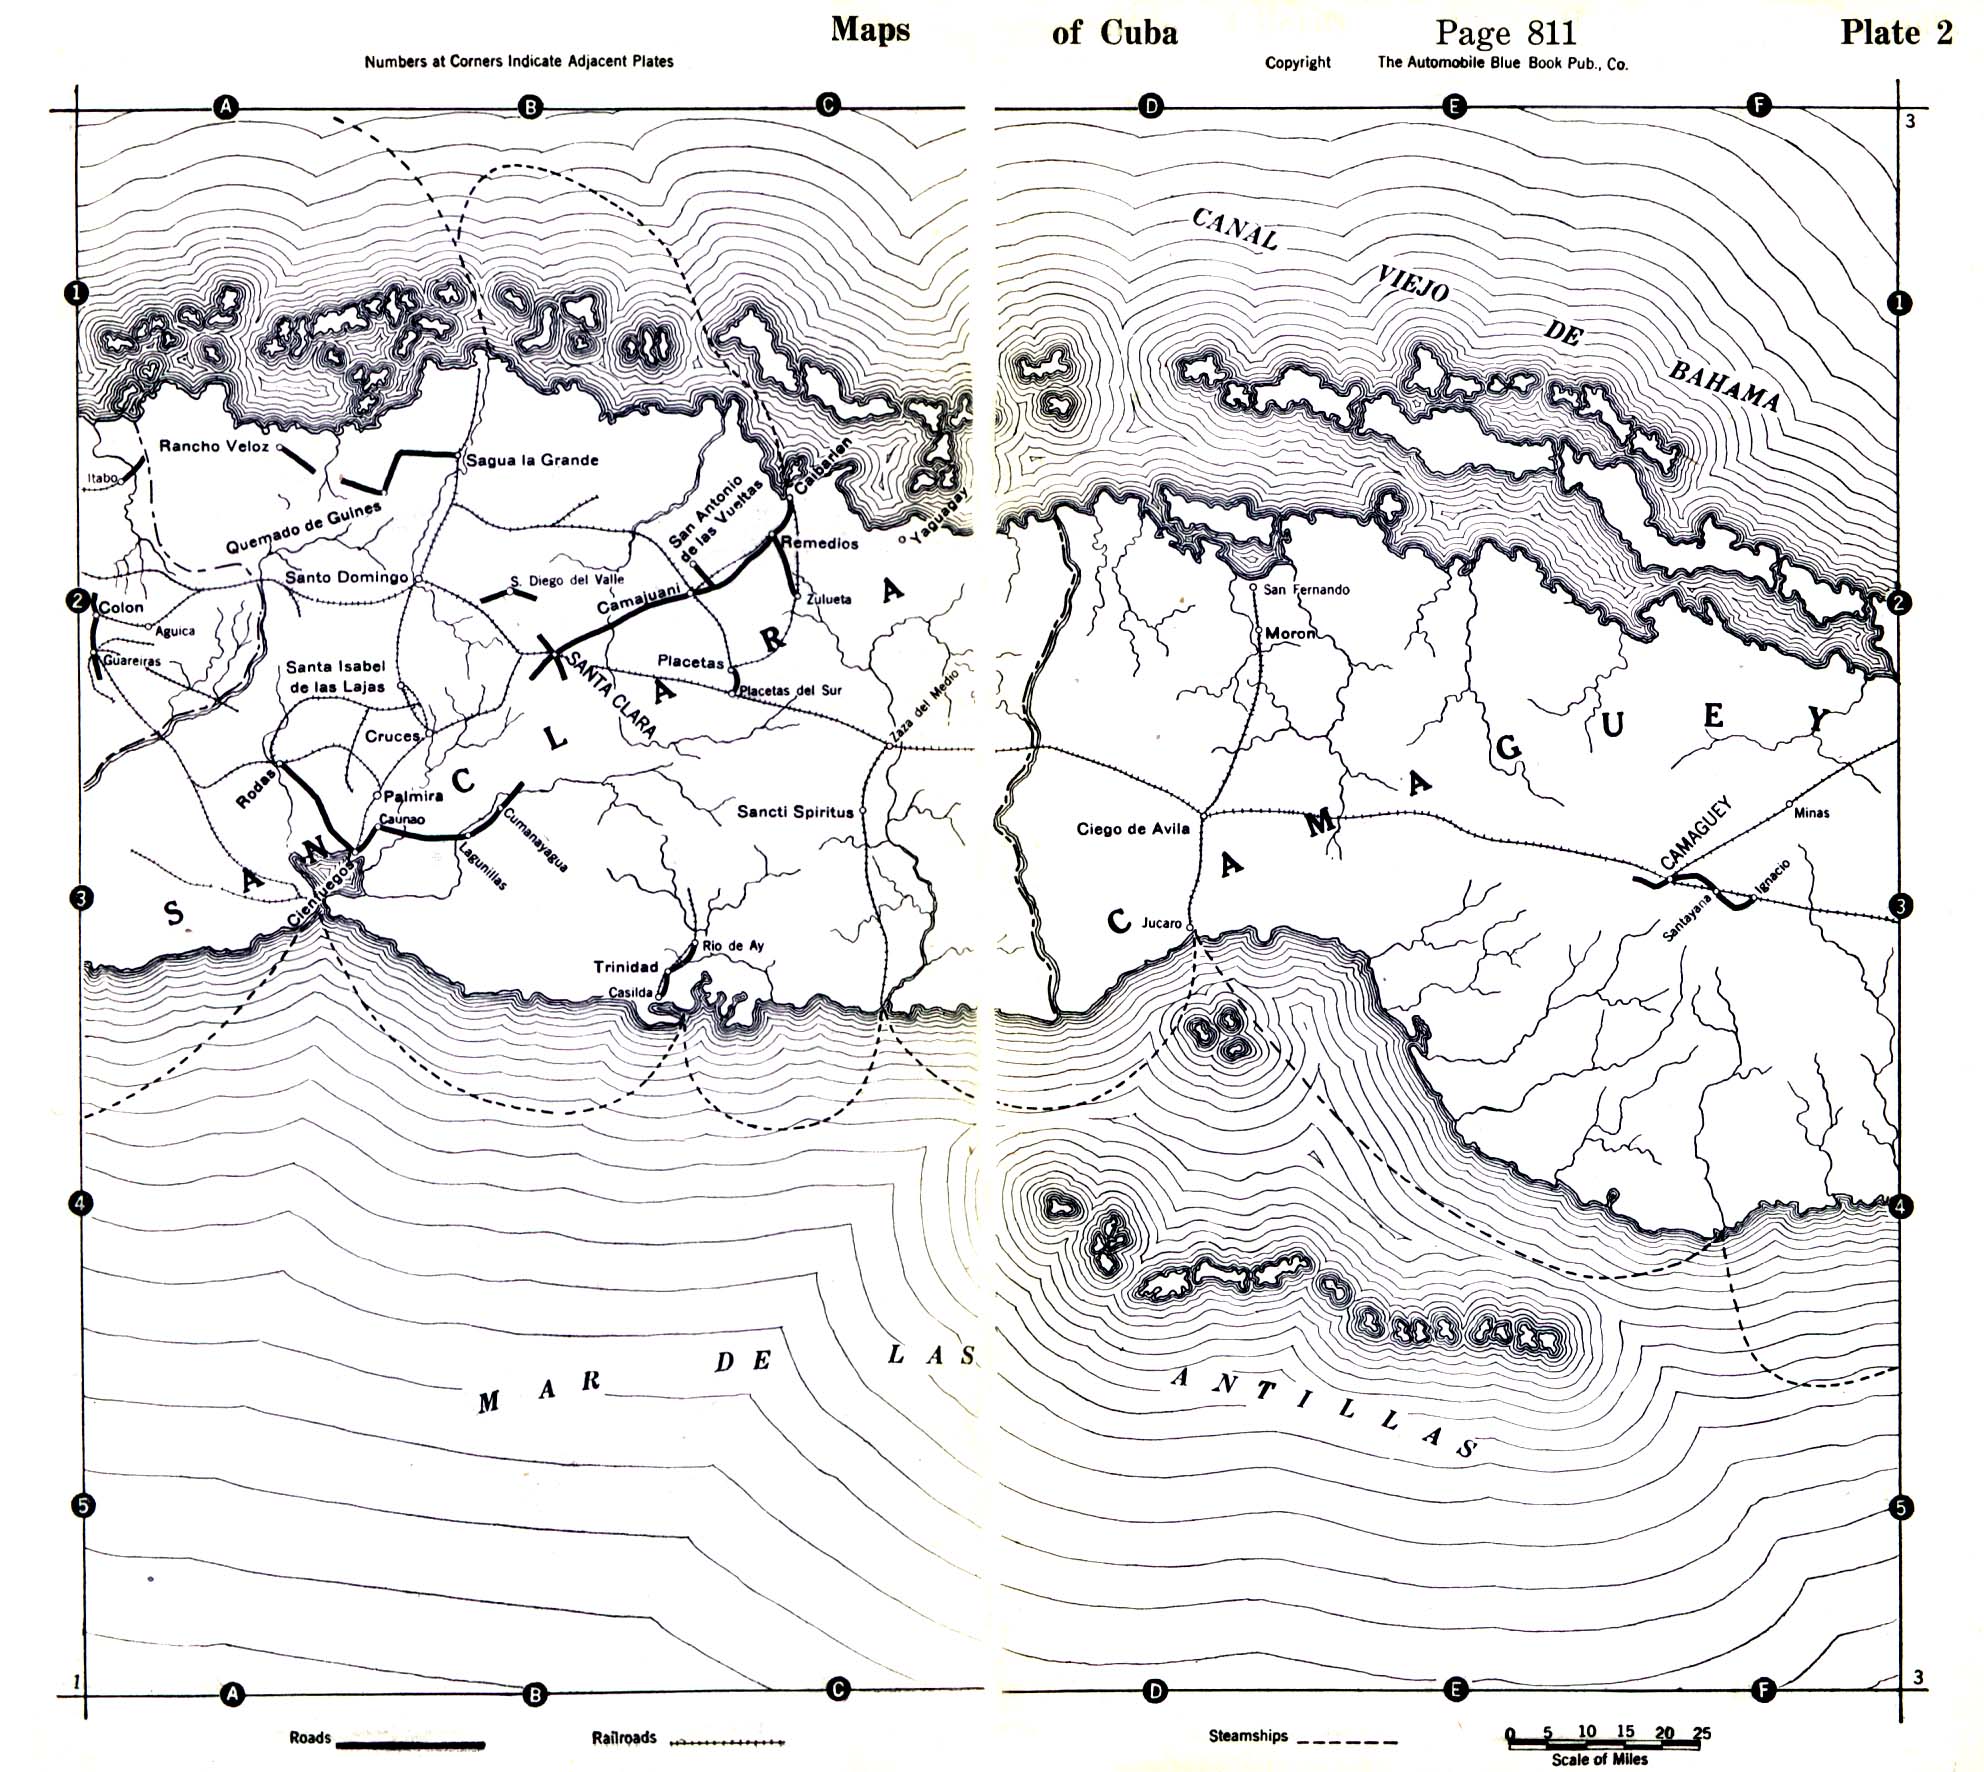 Mapa del Centro de Cuba 1919